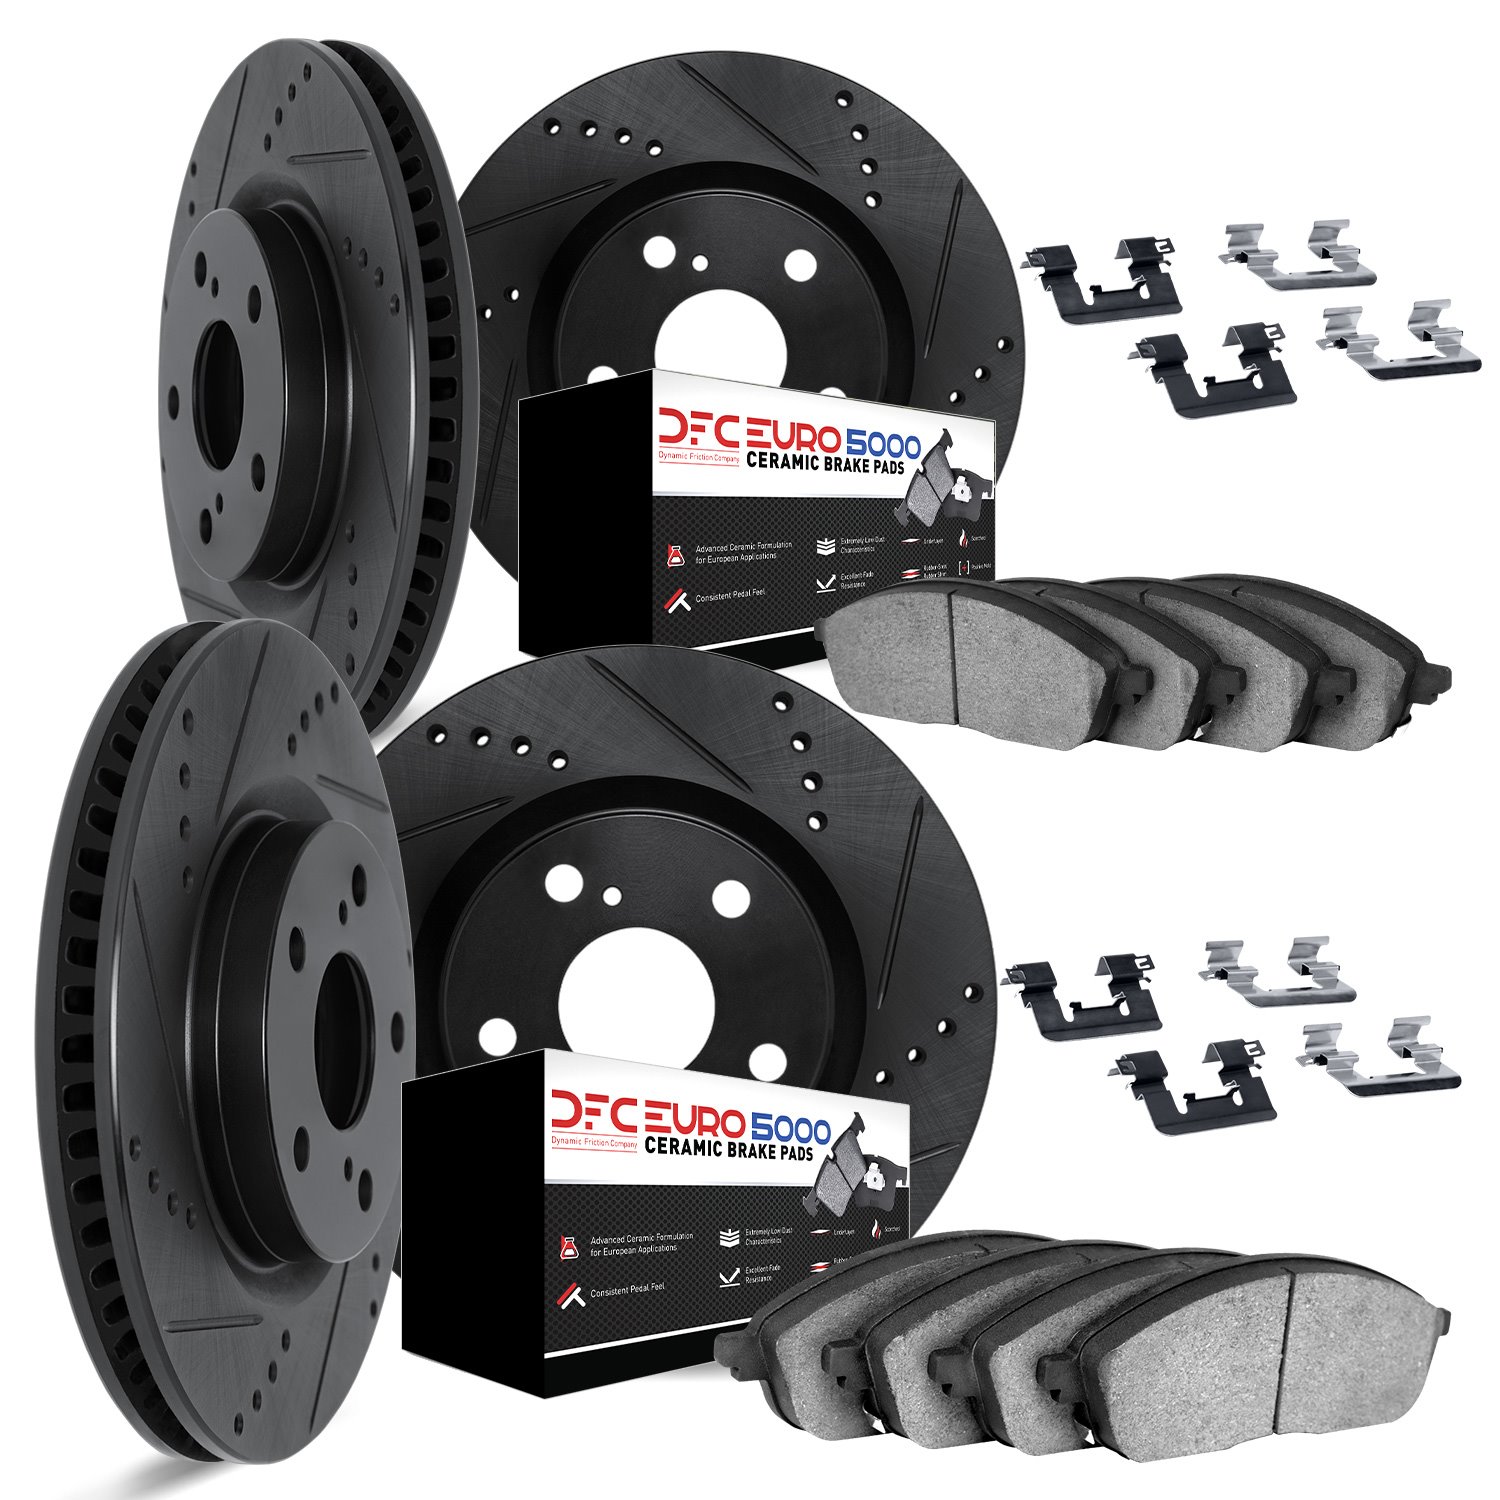 8614-31041 Drilled/Slotted Brake Rotors w/5000 Euro Ceramic Brake Pads Kit & Hardware [Black], Fits Select BMW, Position: Front